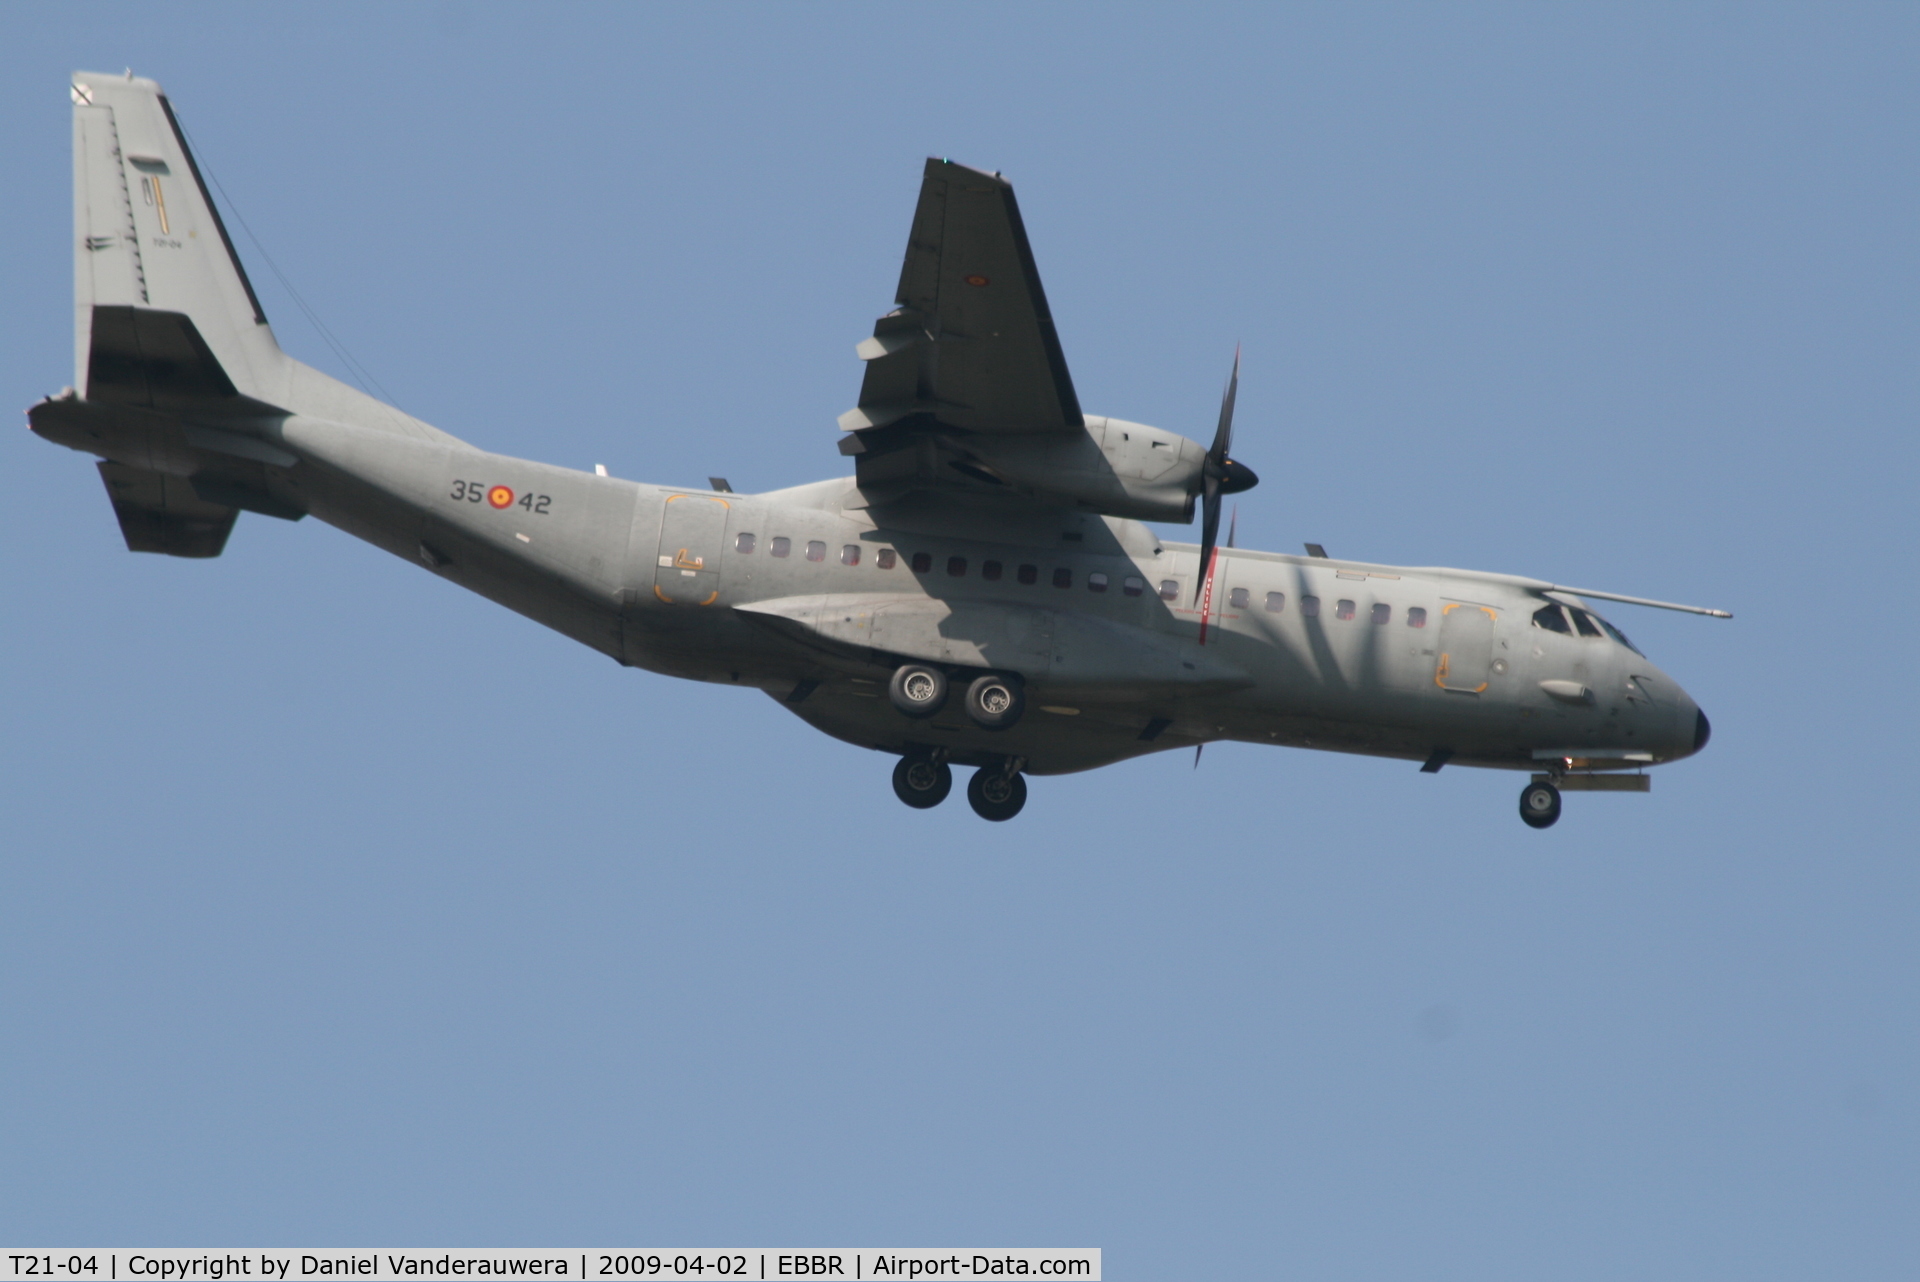 T21-04, 2003 CASA C-295M C/N EA03-04-005, Descending to RWY 02